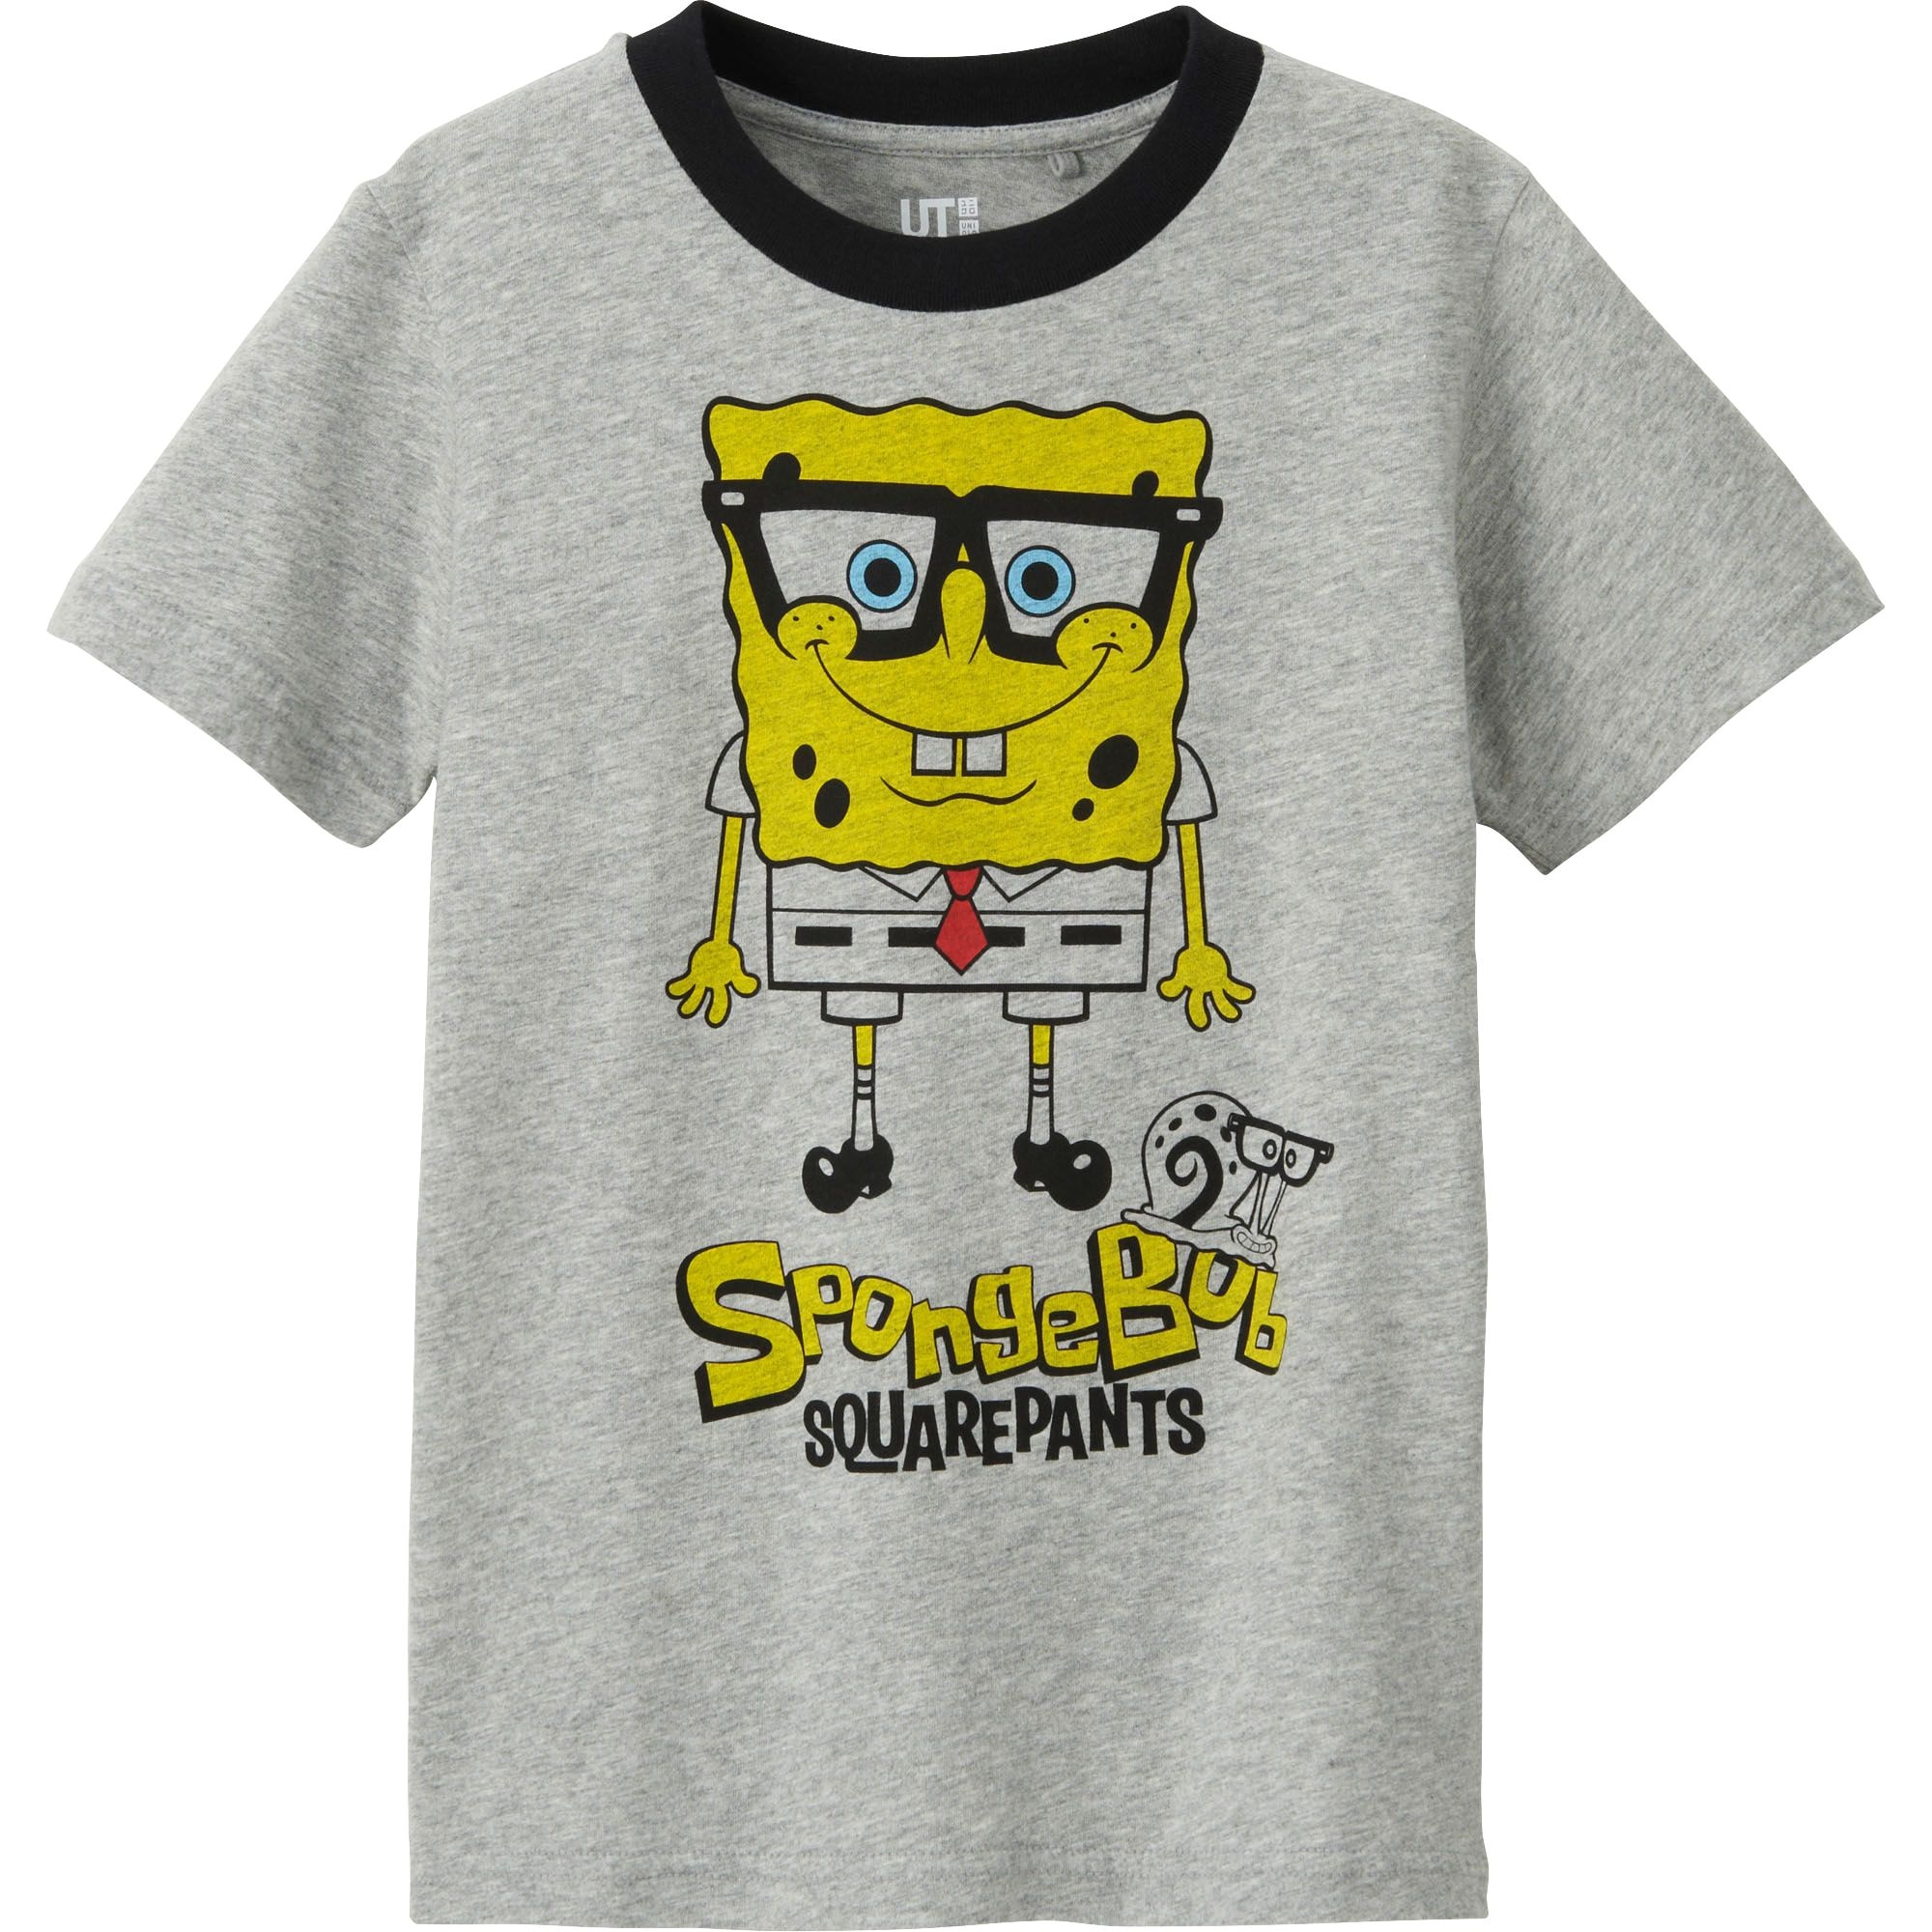 spongebob t shirt india